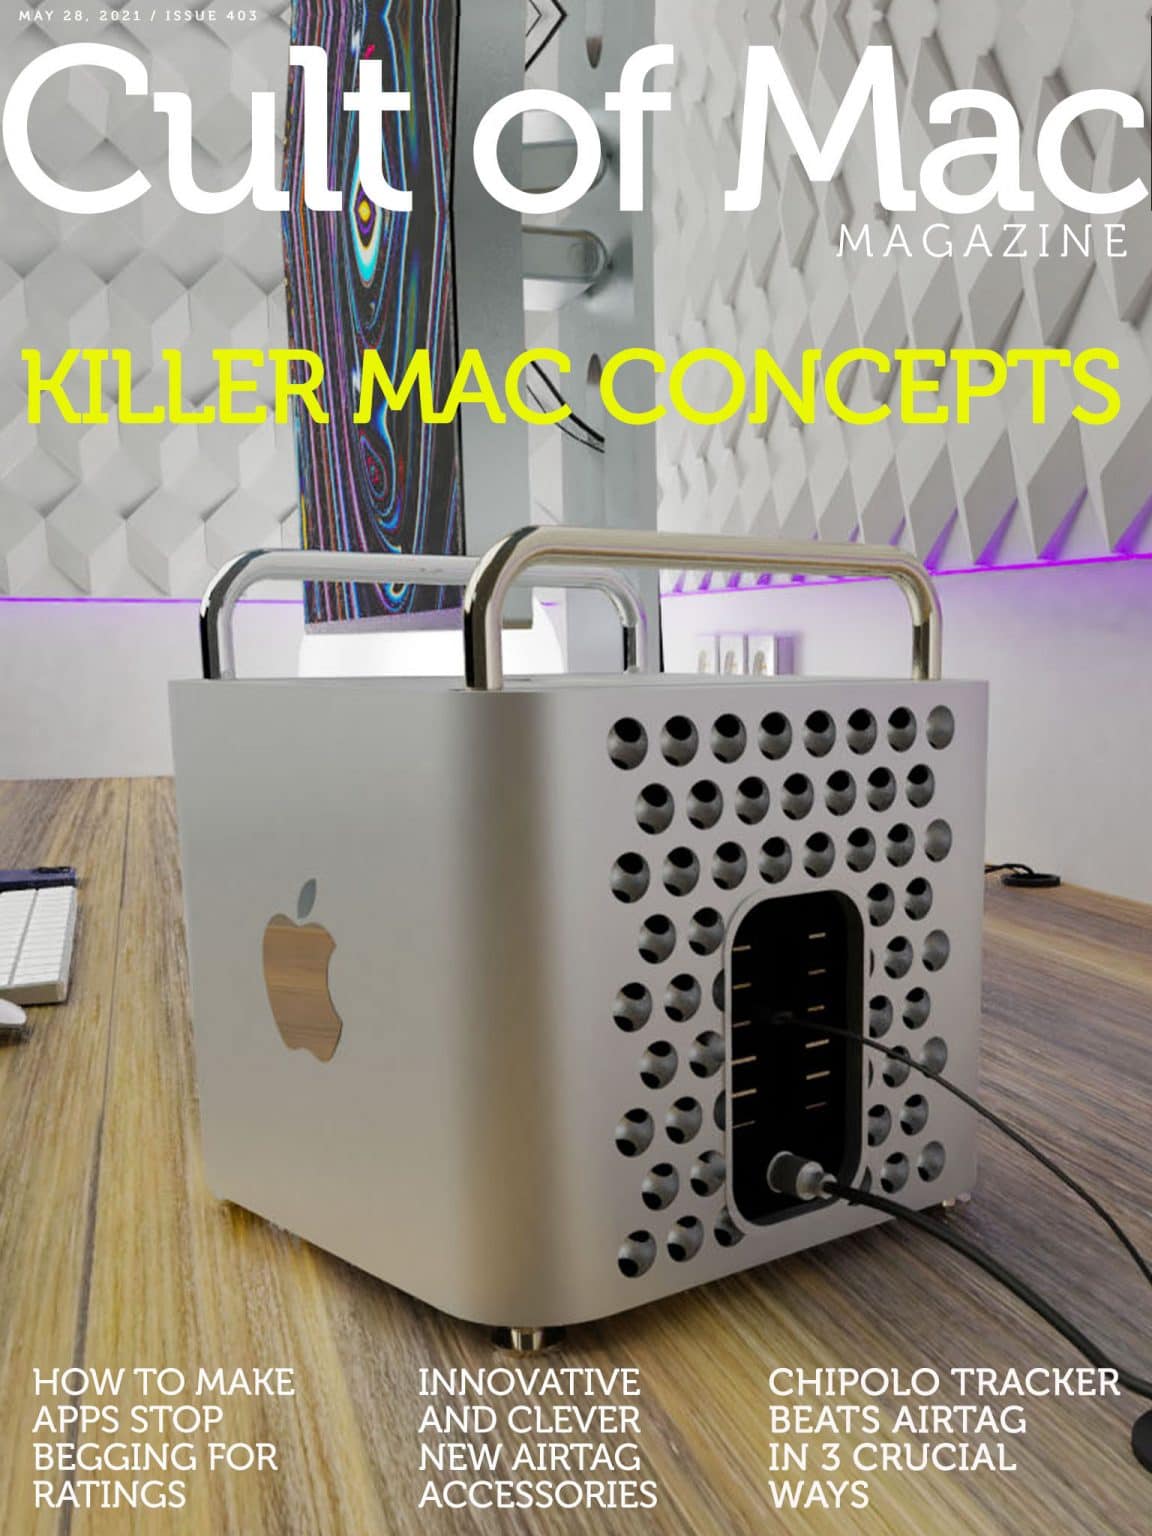 Killer Mac concepts: Ready to visual the future?